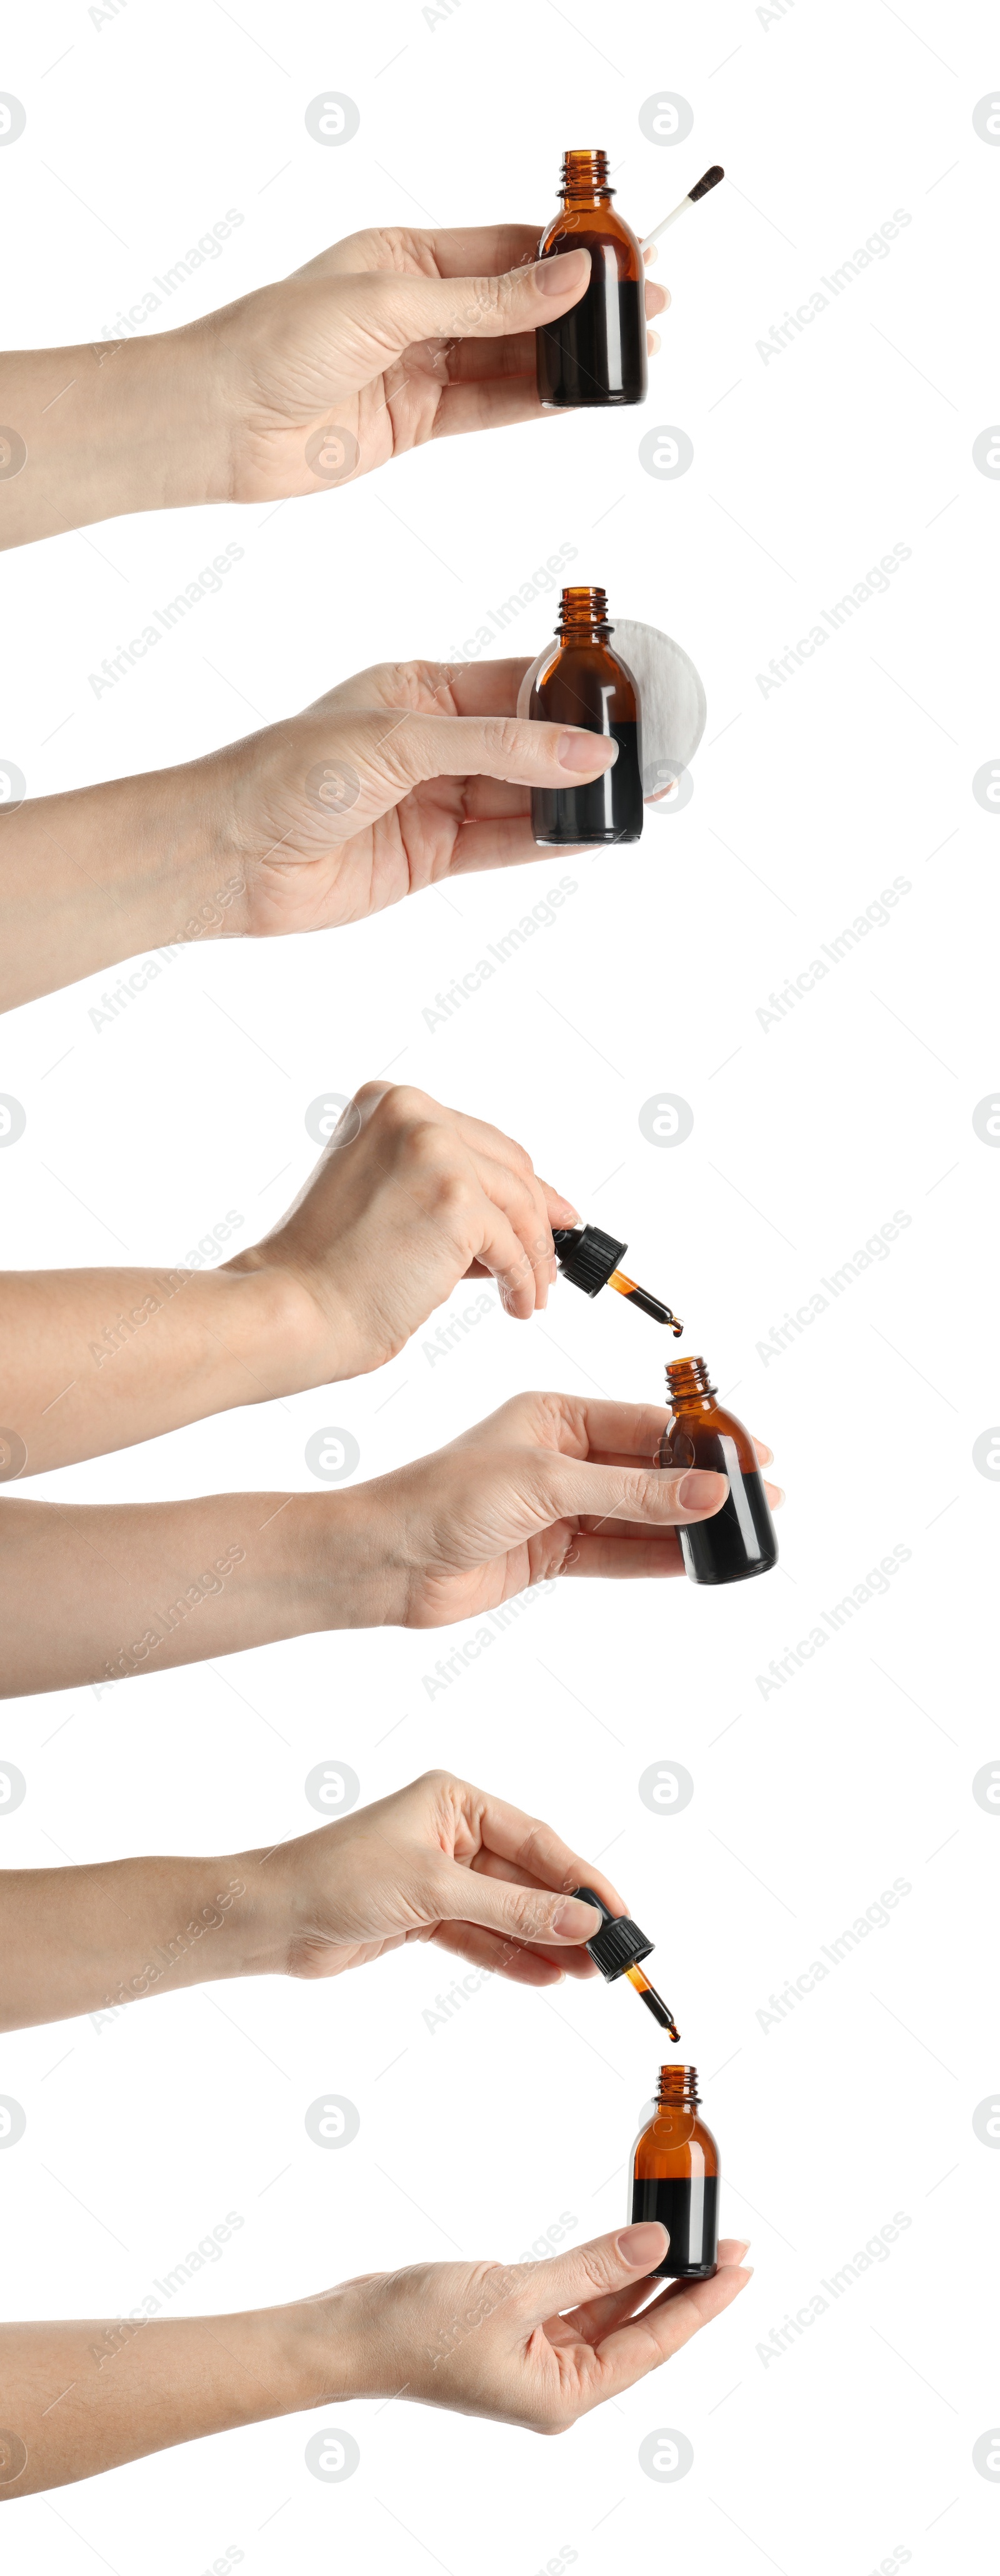 Image of Women holding bottles of medical iodine on white background, closeup. Collage